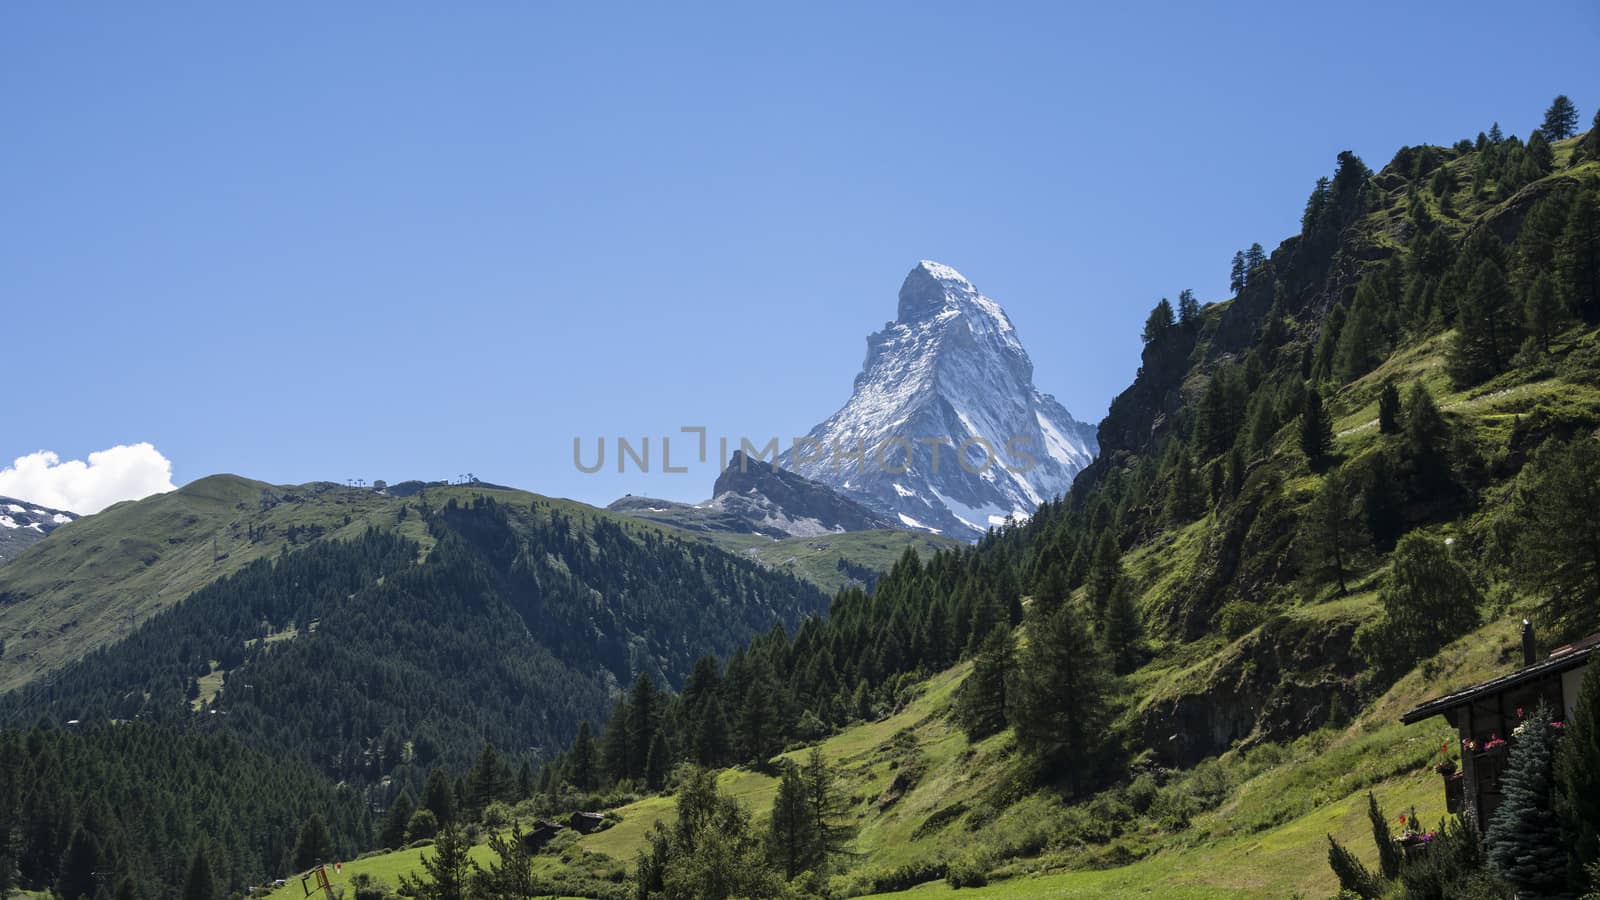 Landscape image of Matterhorn in Switzerland in August.